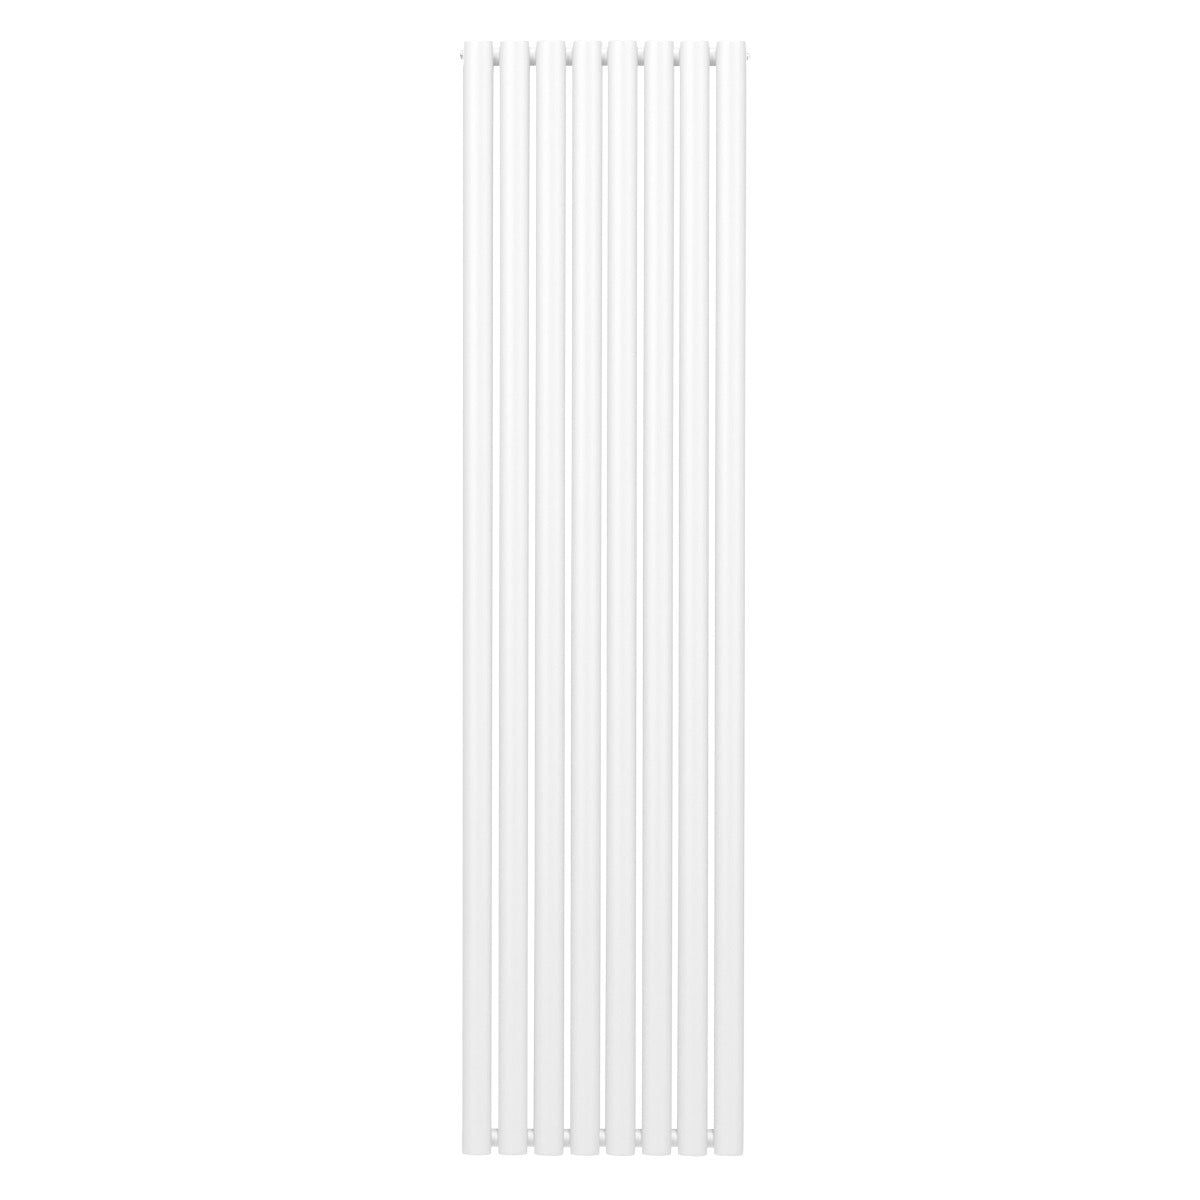 Oval Column Radiator – 1800mm x 480mm – White